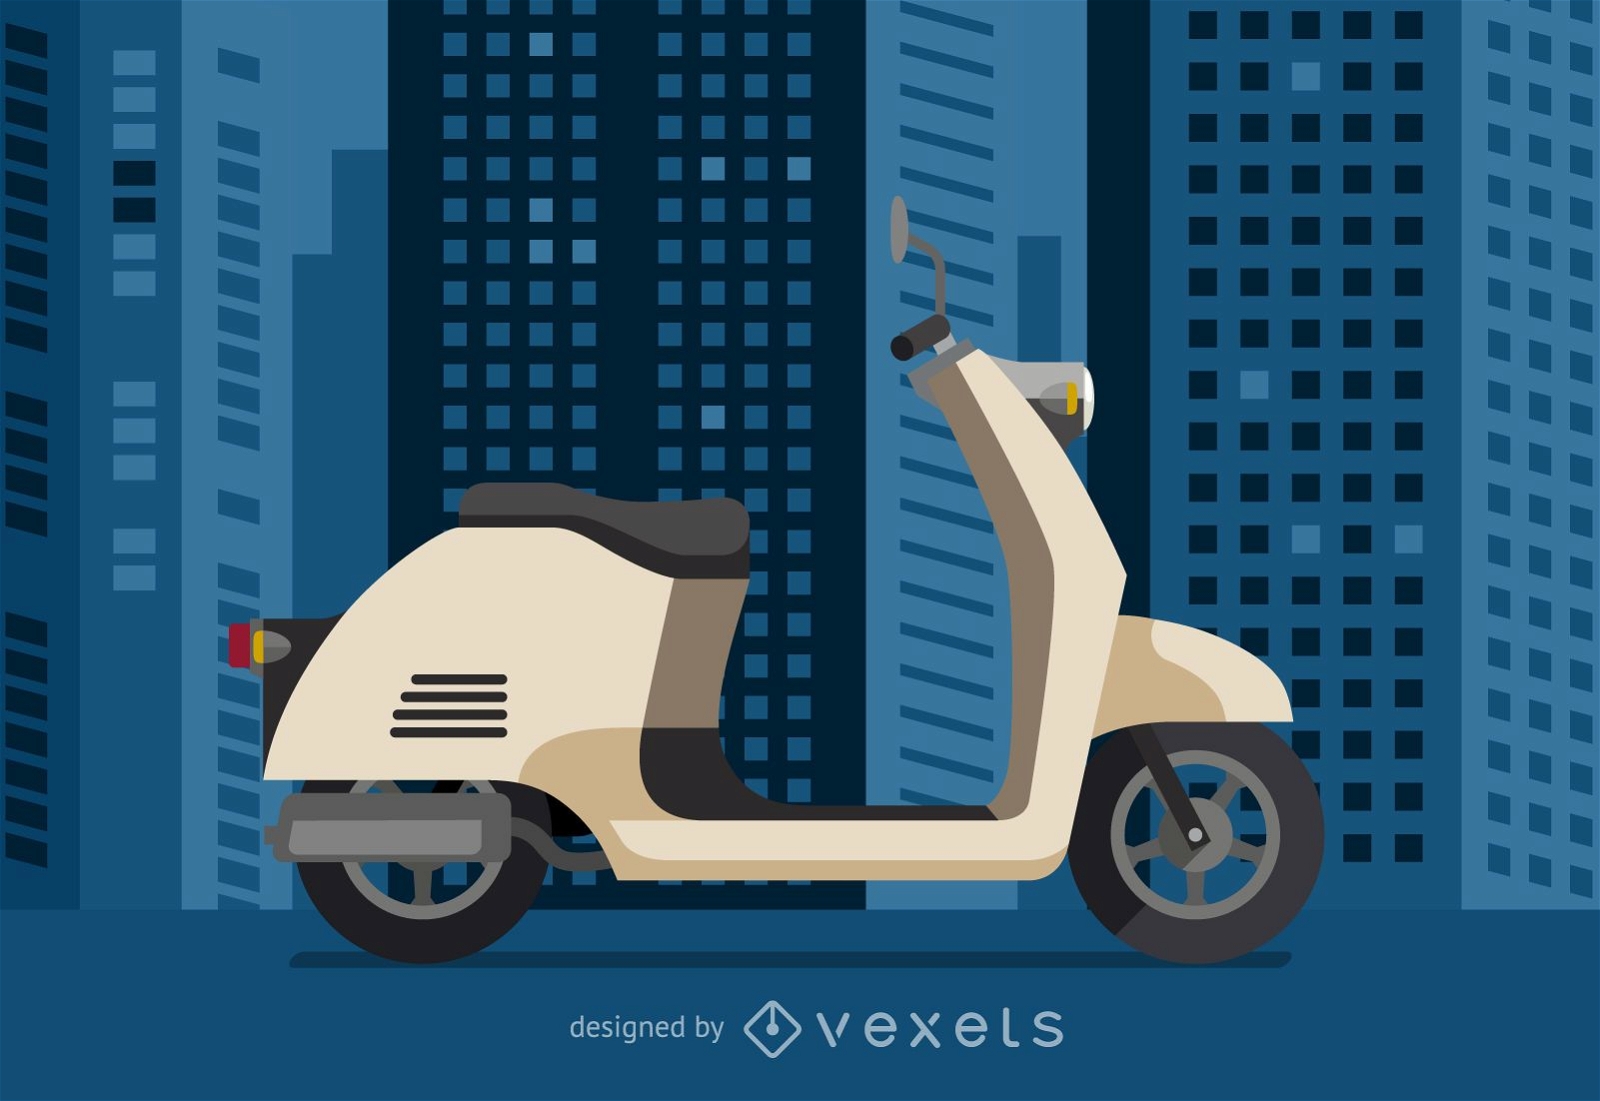 Scooter vehicle illustration